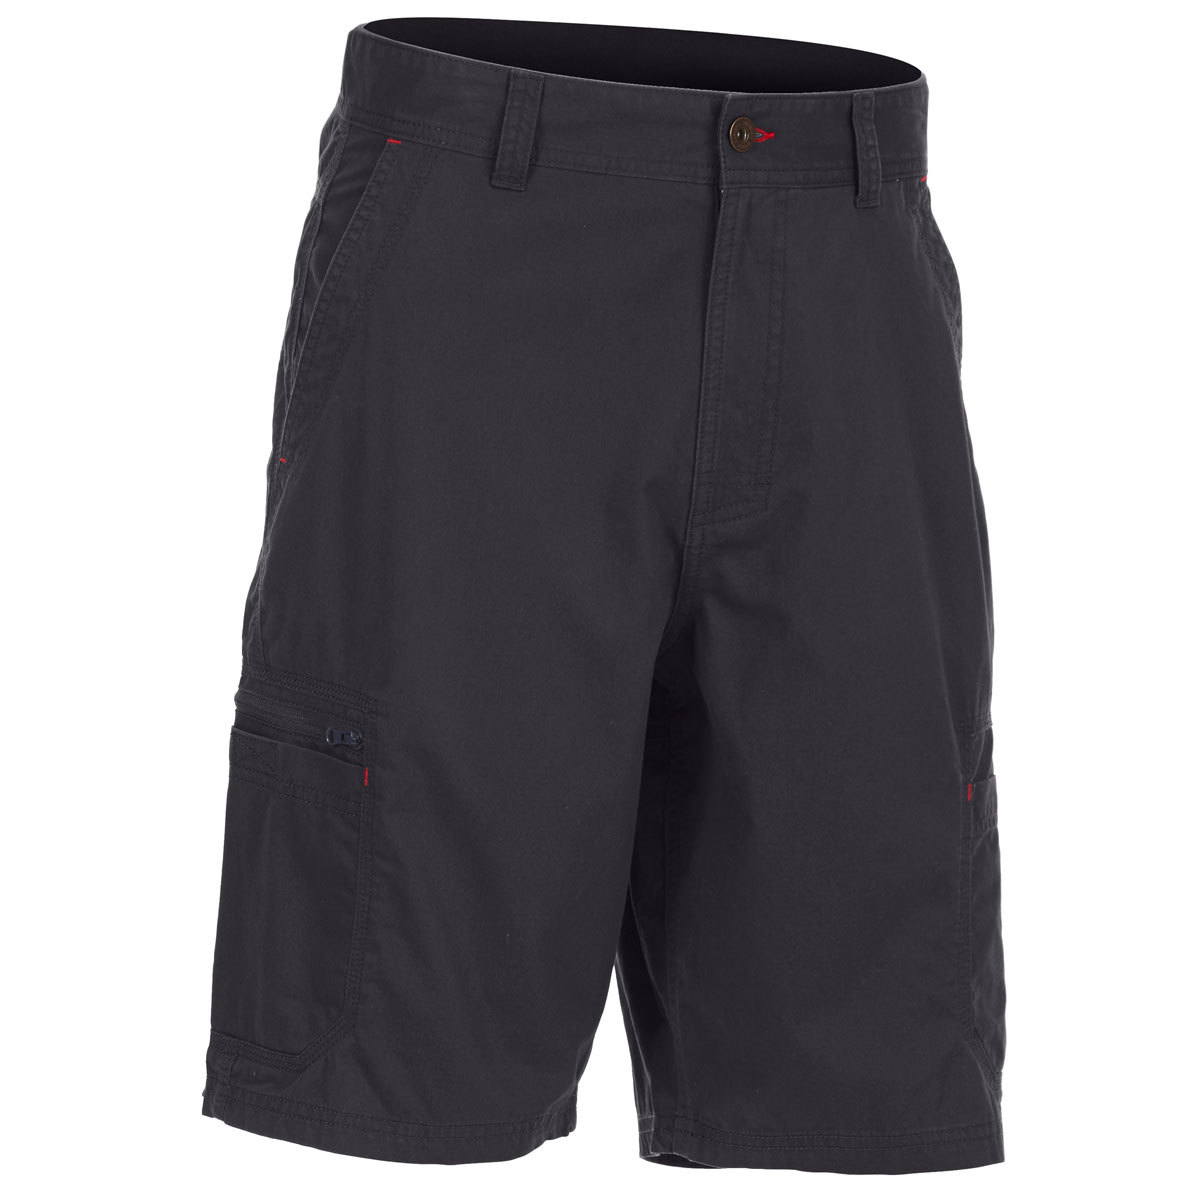 Ems Men's Rohne Shorts - Black, 30